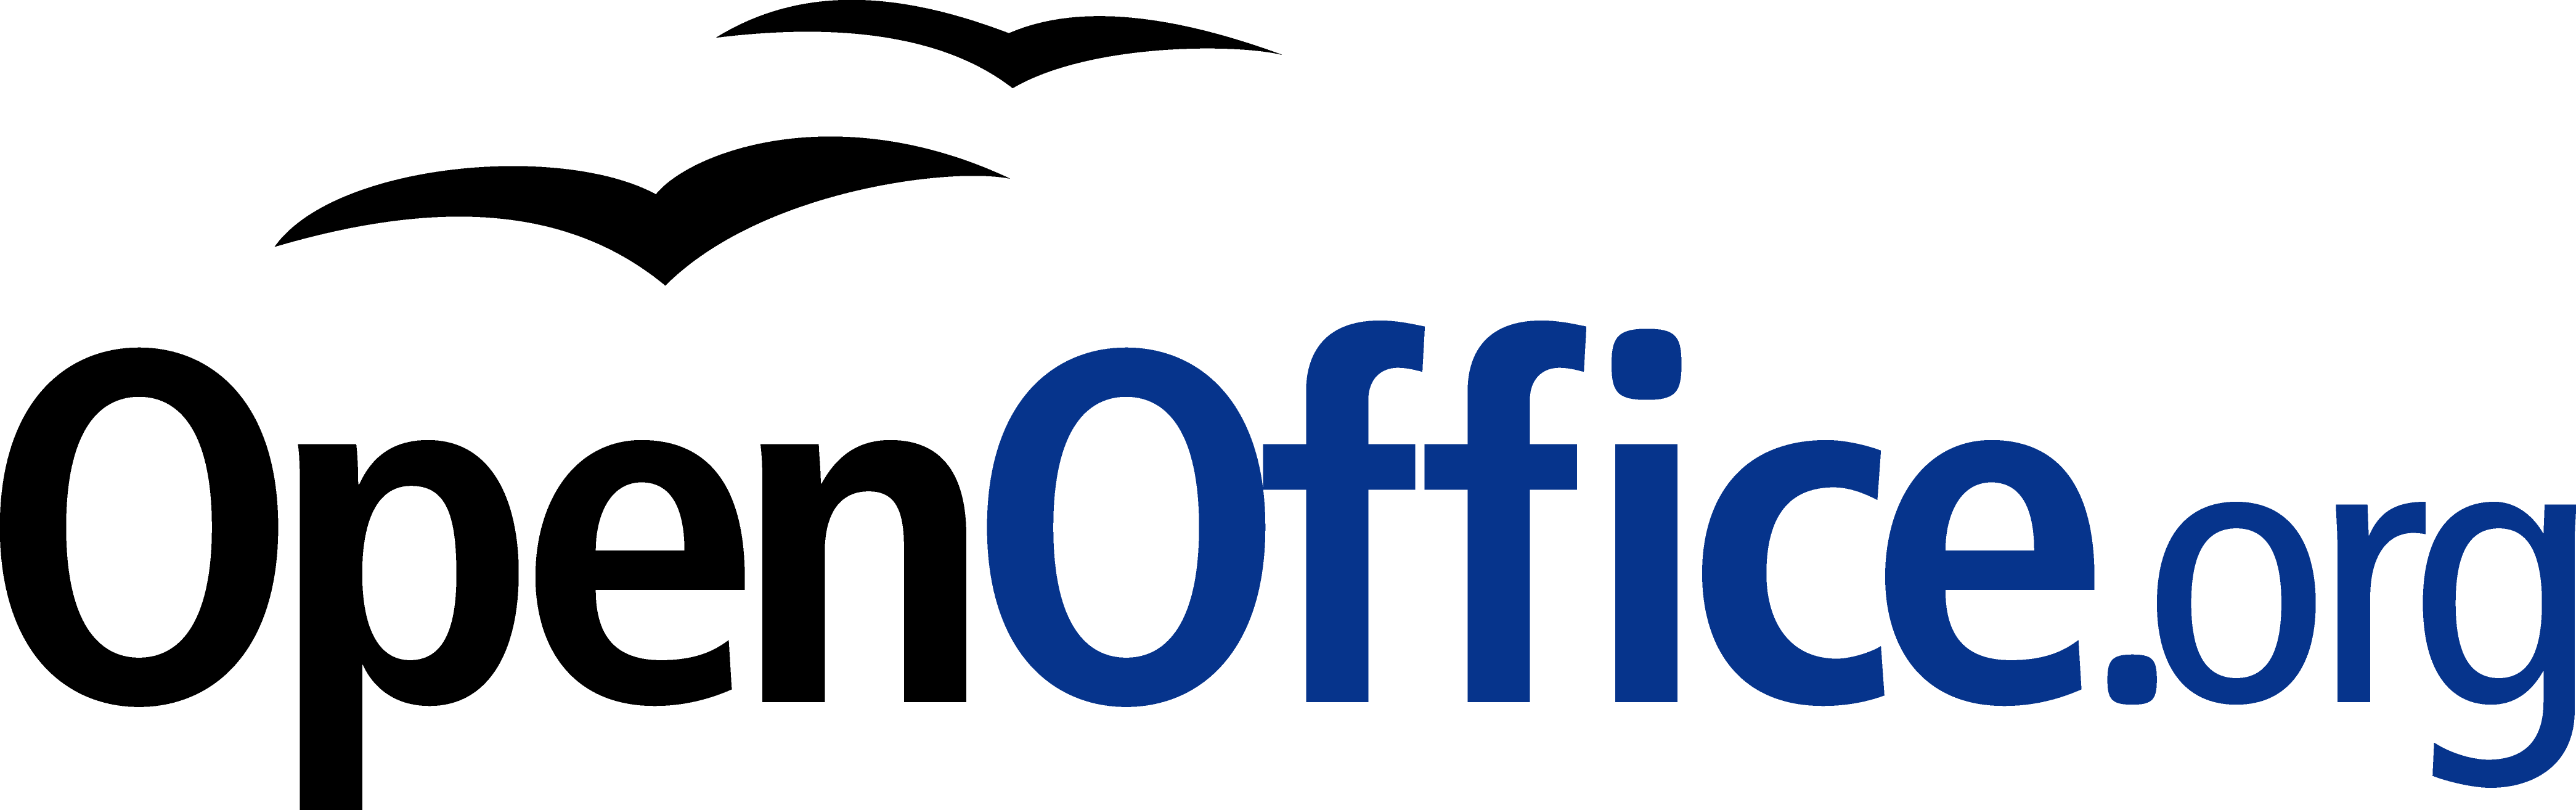 OpenOffice.org 4.0.0 Ooo-main-logo-col-rgb